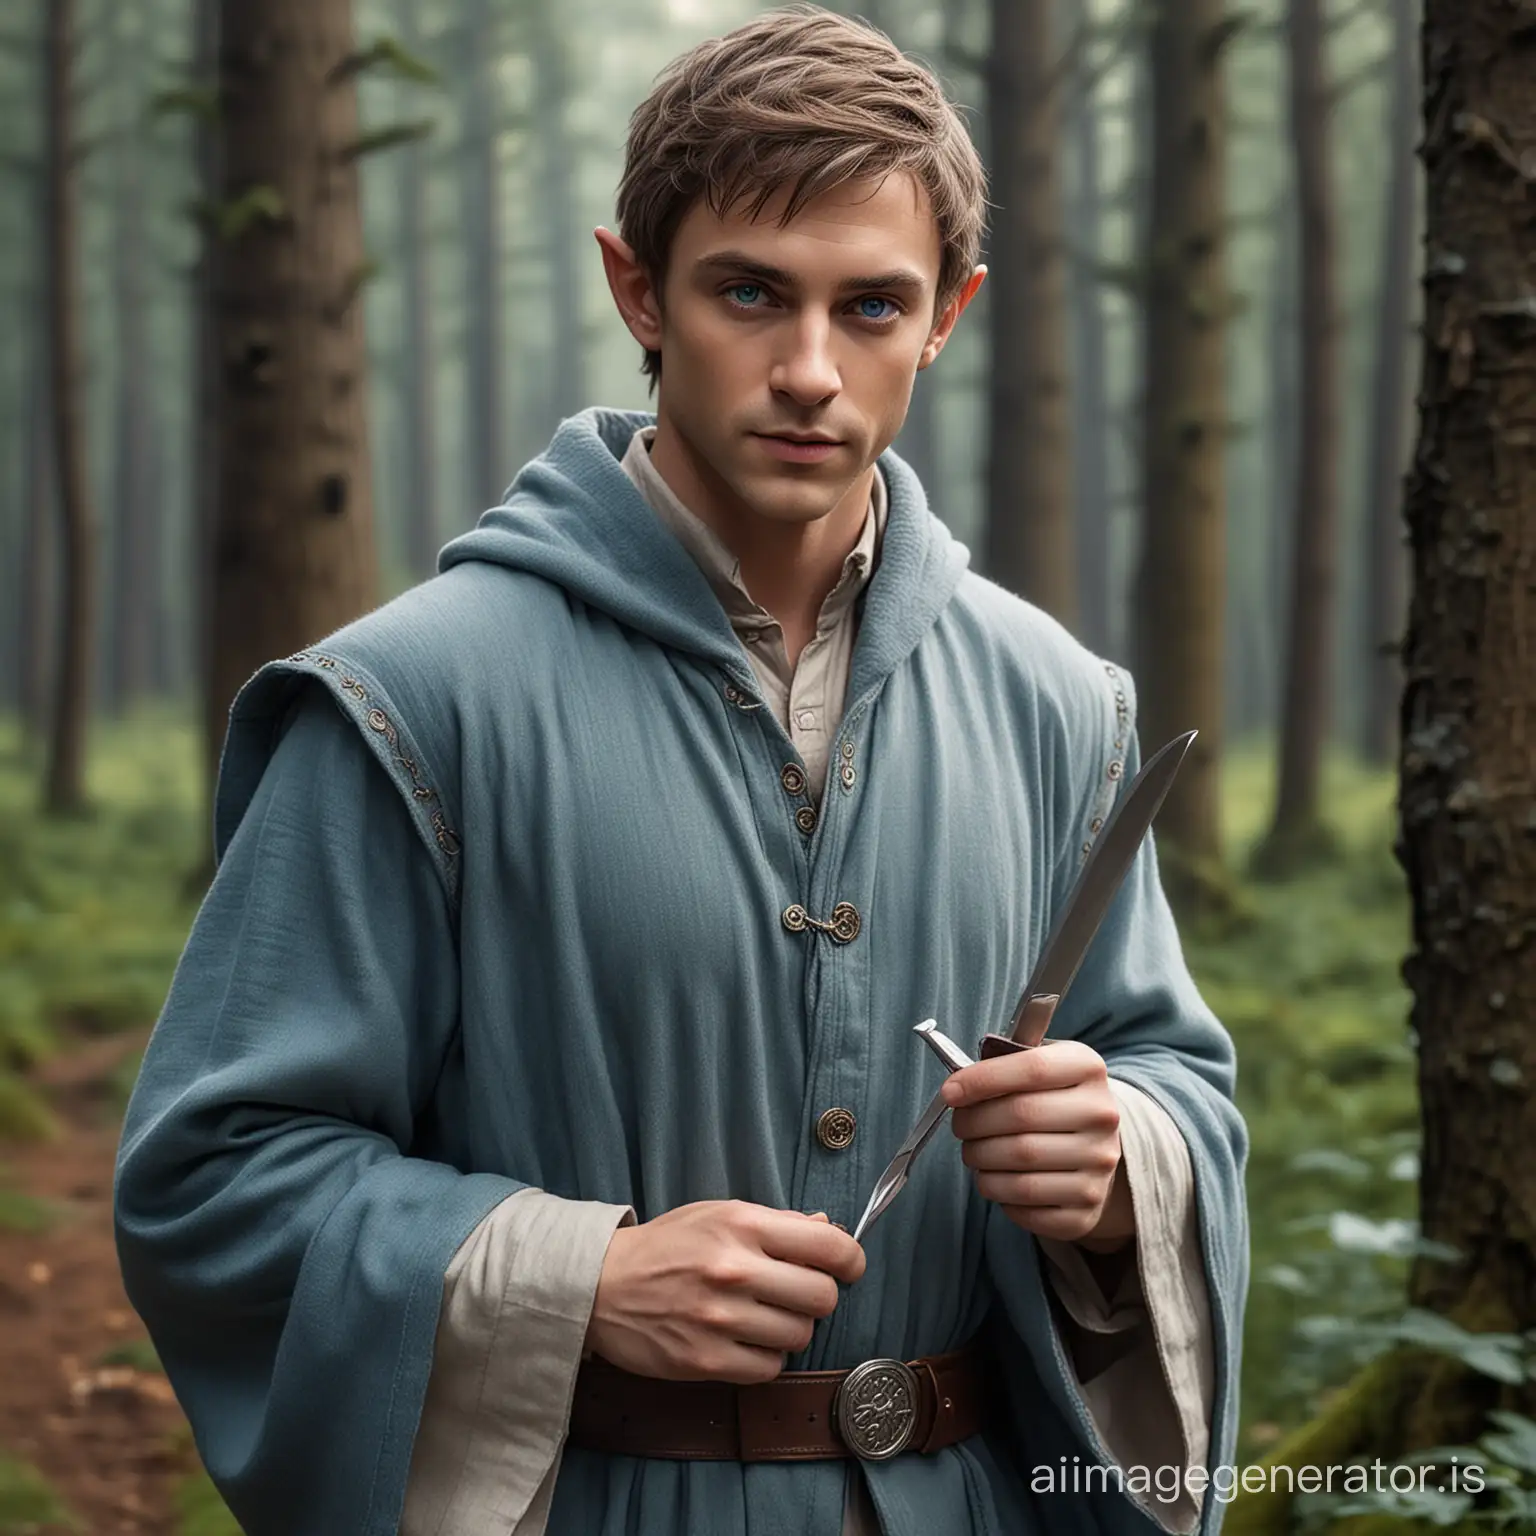 Elegant-Elf-Warrior-in-Grey-Robe-with-Diamondknife-in-a-Mystical-Forest